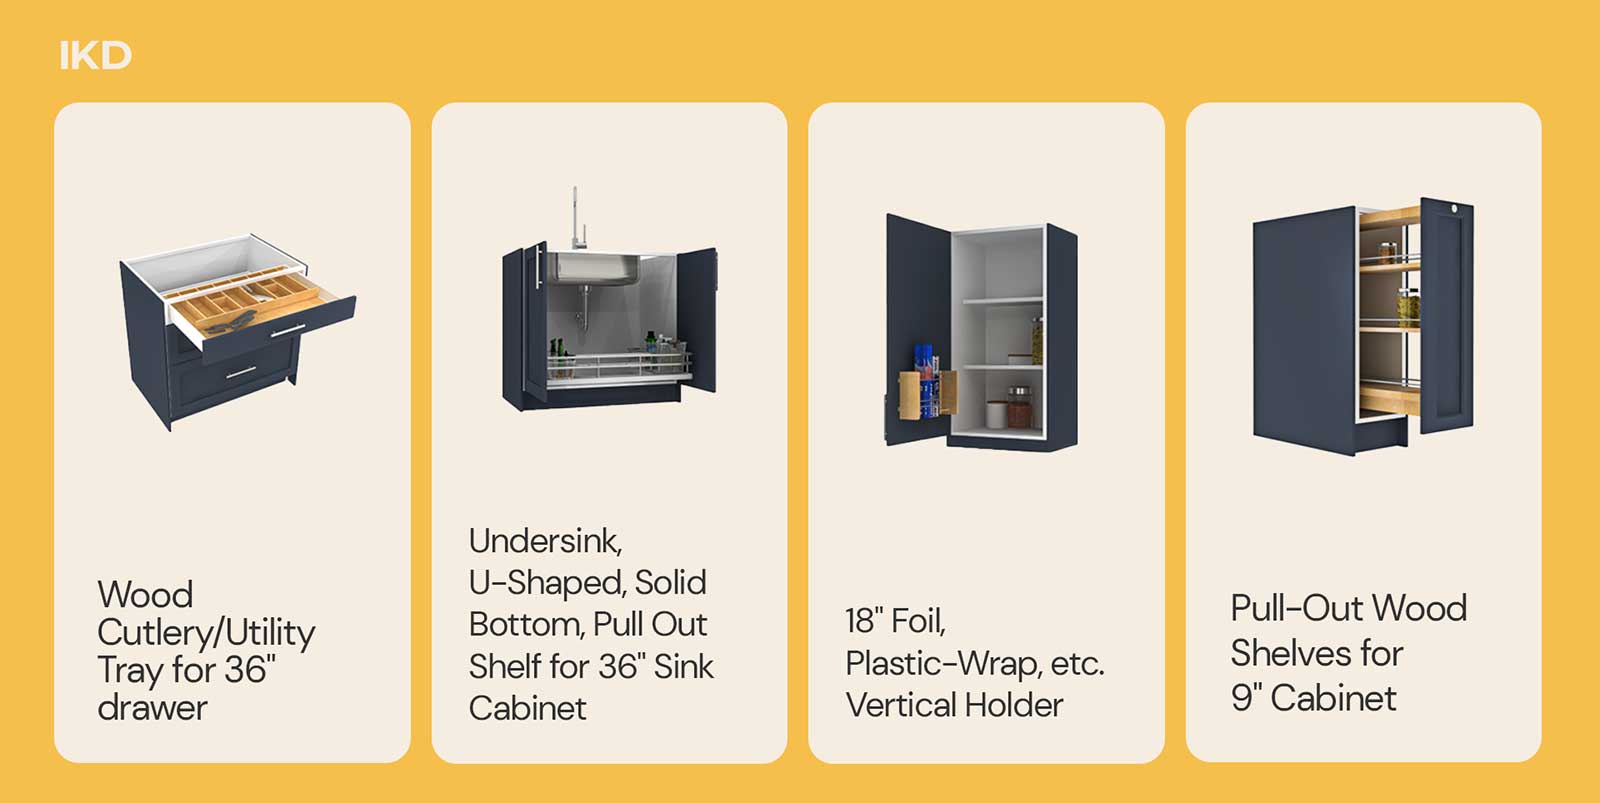 Examples of Rev-a-Shelf kitchen organizer options